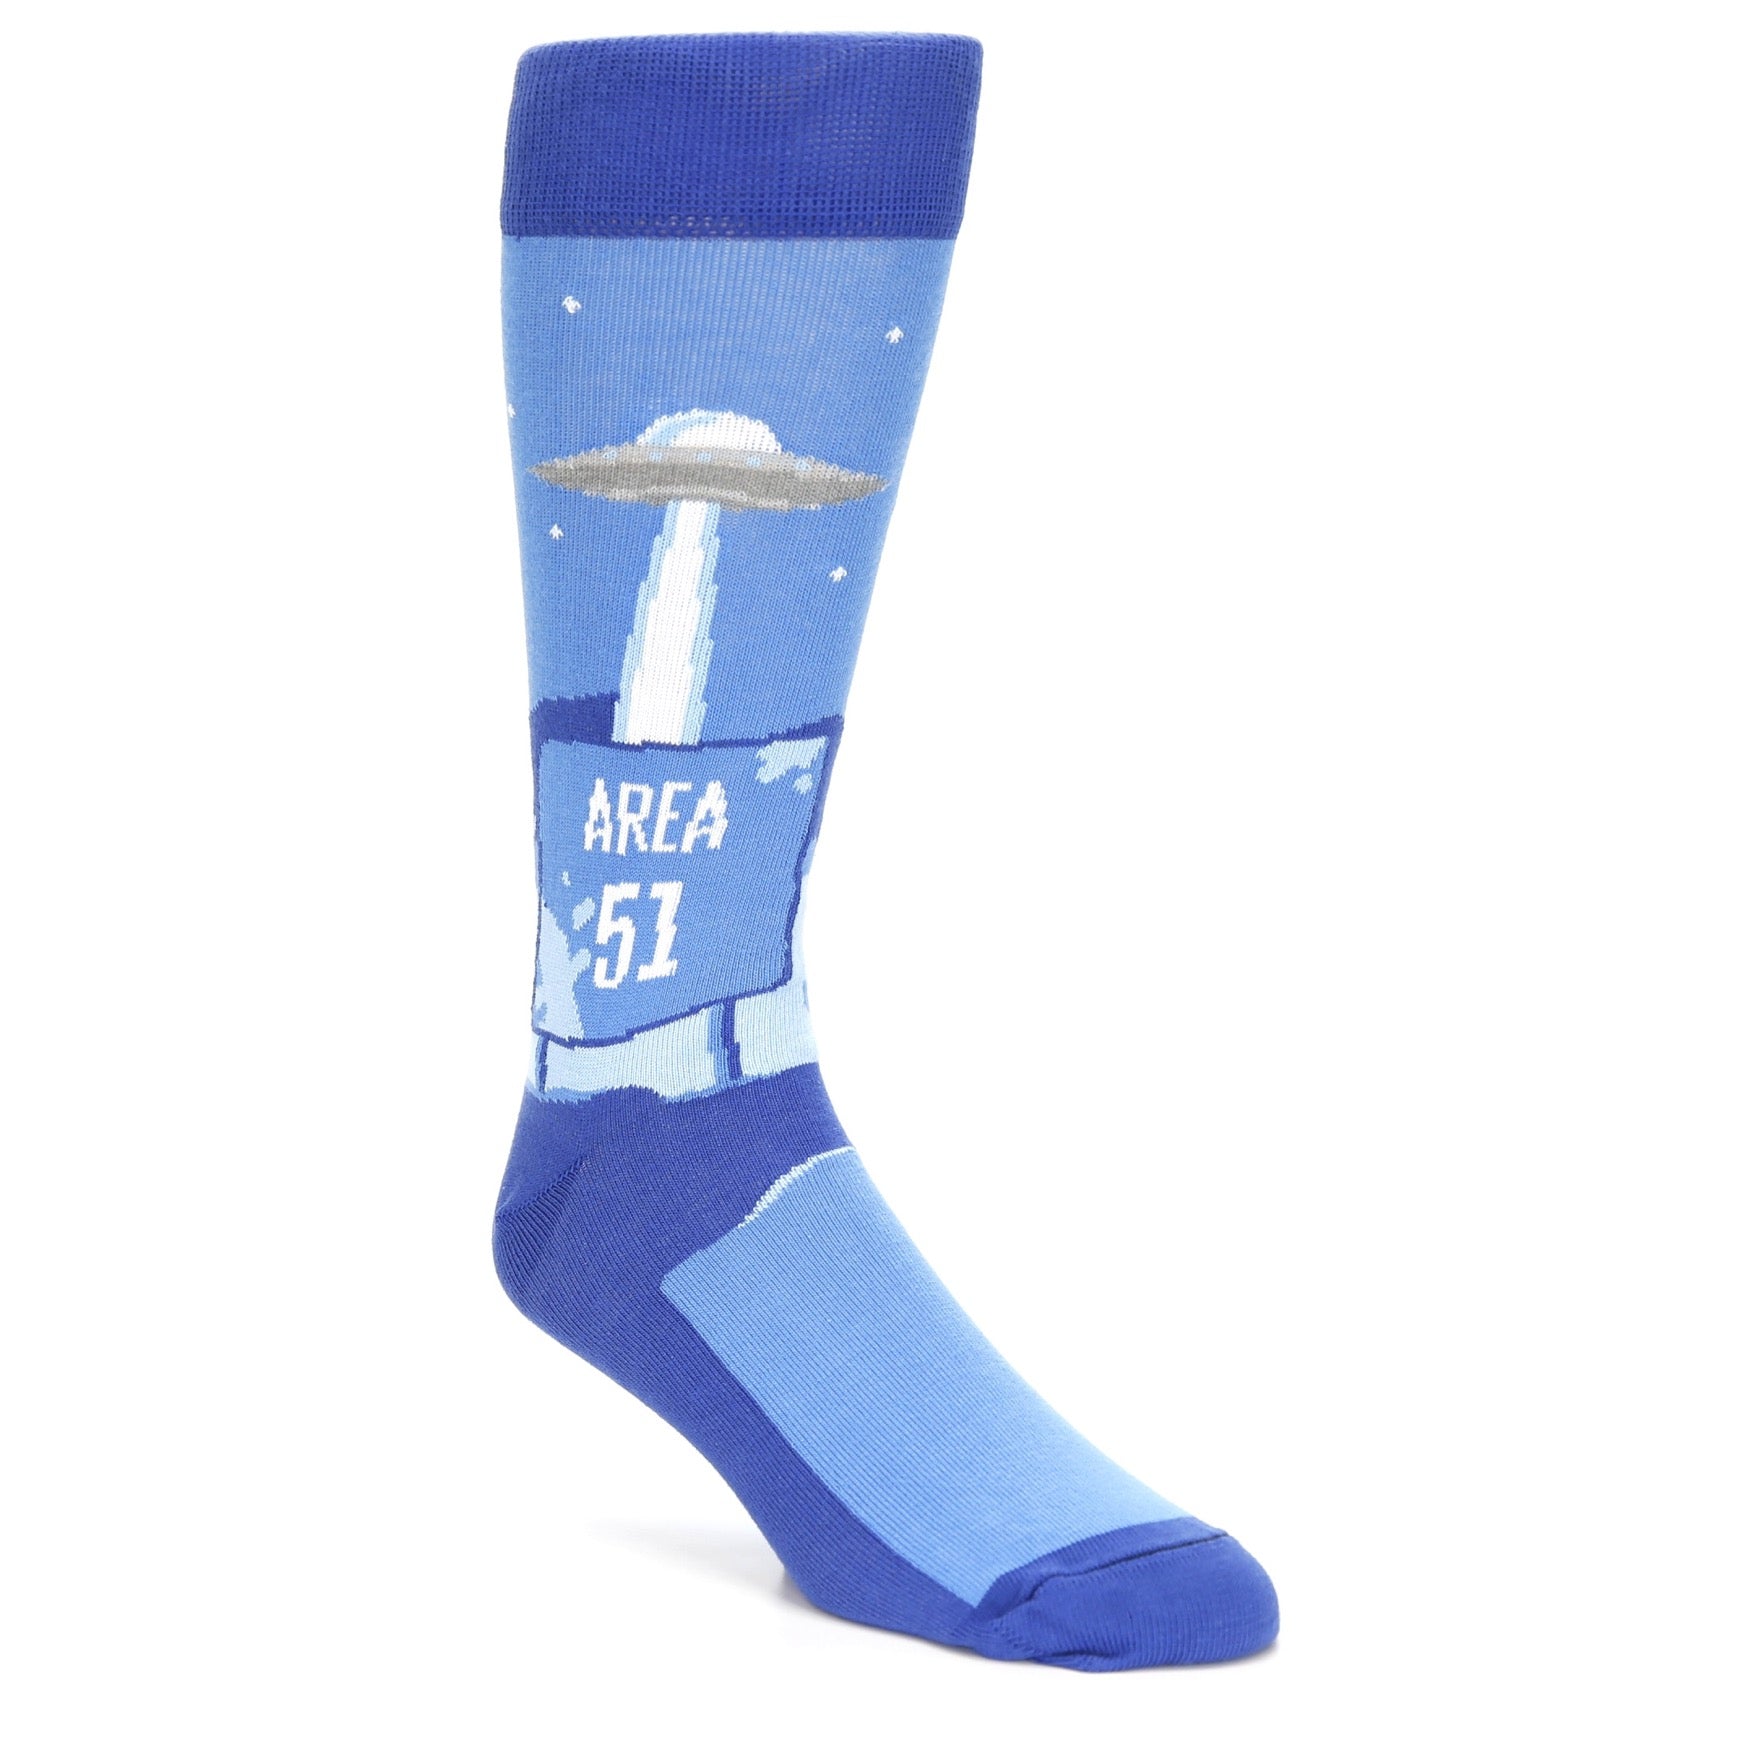 Area 51 UFO Socks - USA Made - Men's Novelty Socks